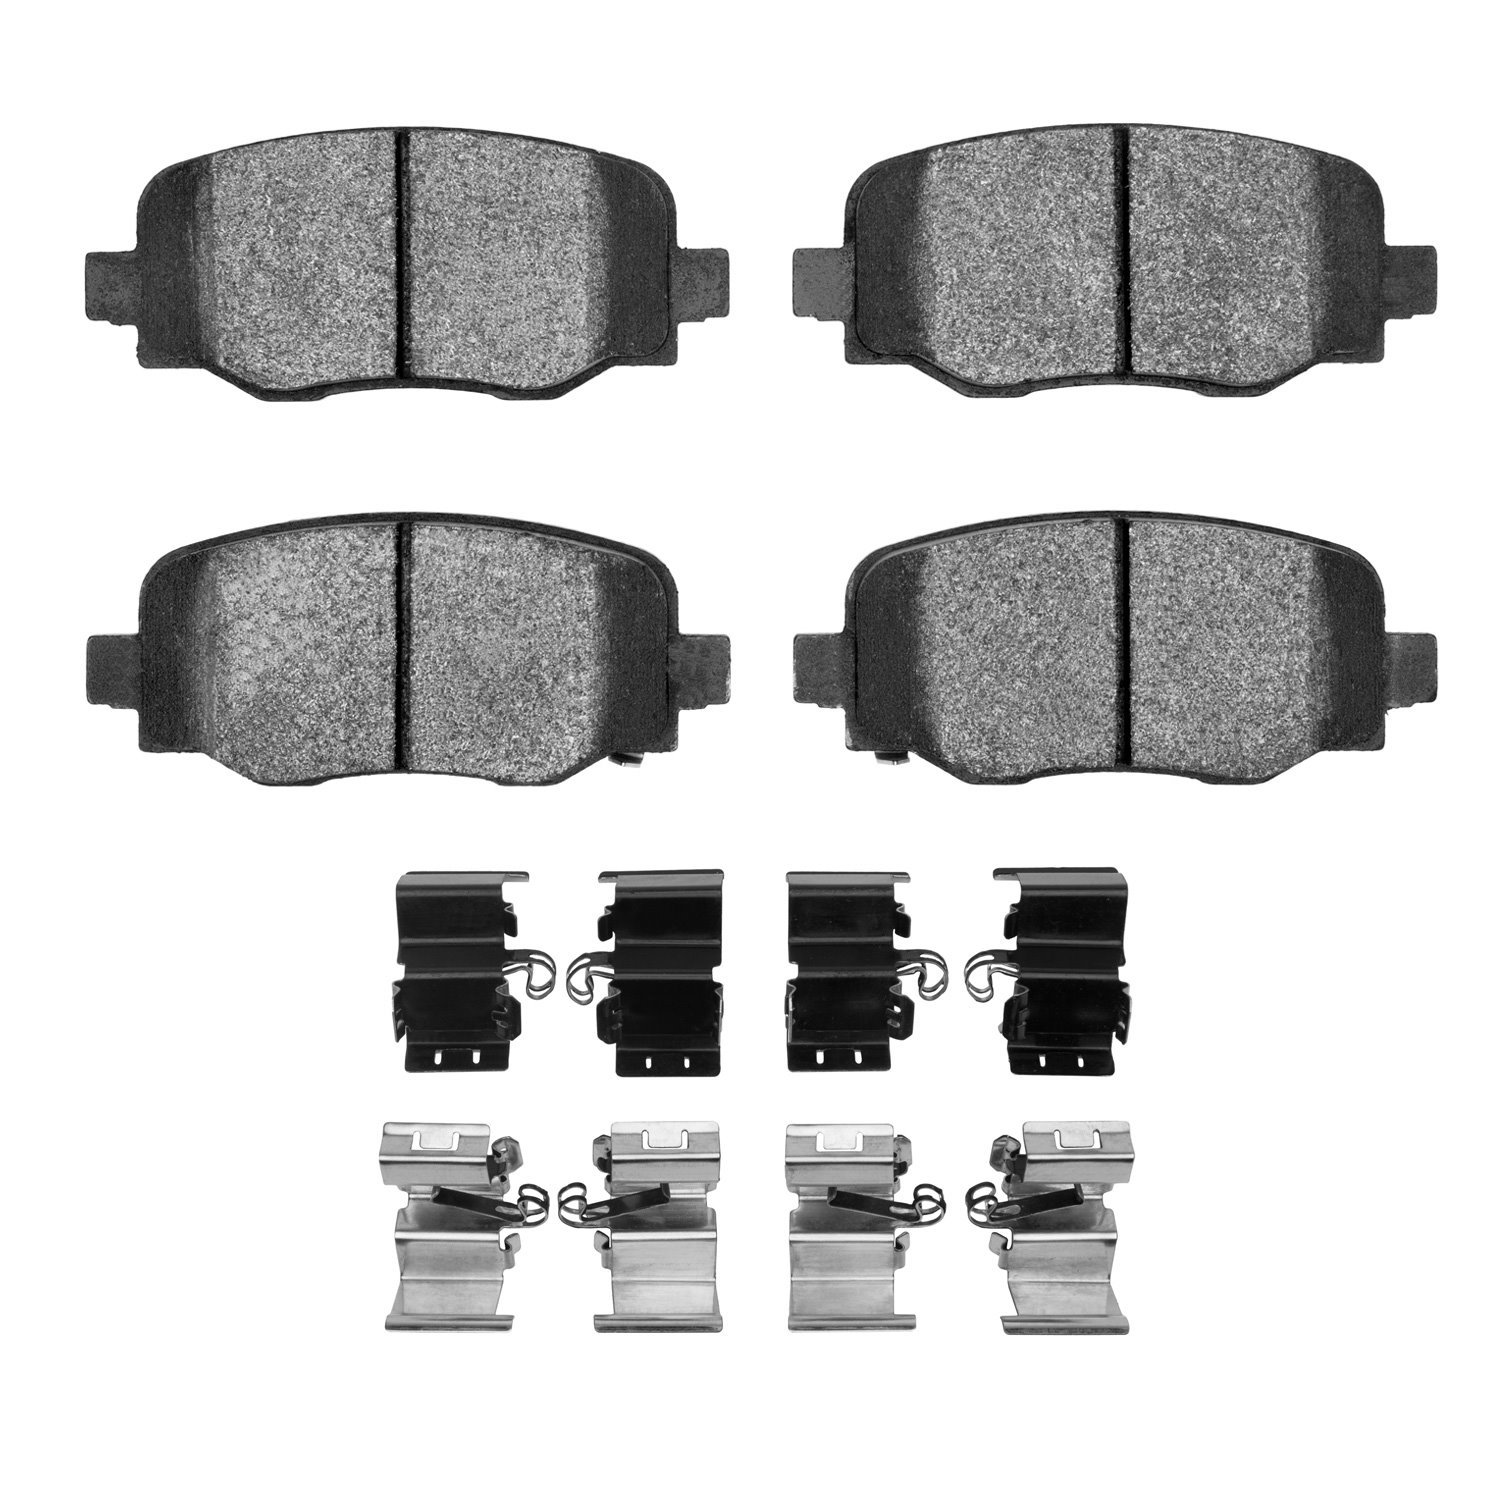 1310-1809-01 3000-Series Ceramic Brake Pads & Hardware Kit, Fits Select Mopar, Position: Rear